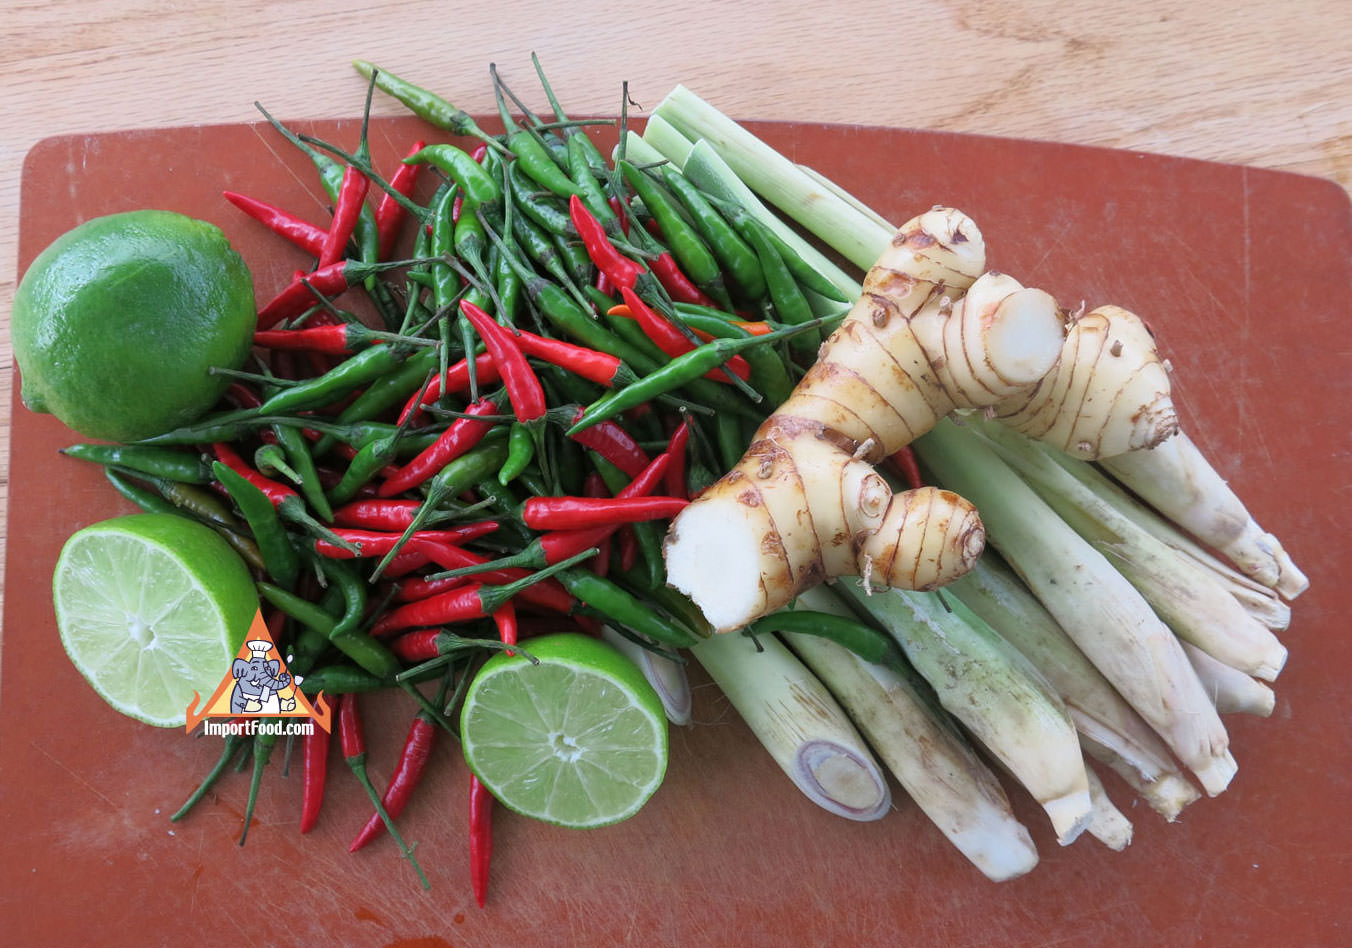 亚博电竞链接Fresh Thai produce kit